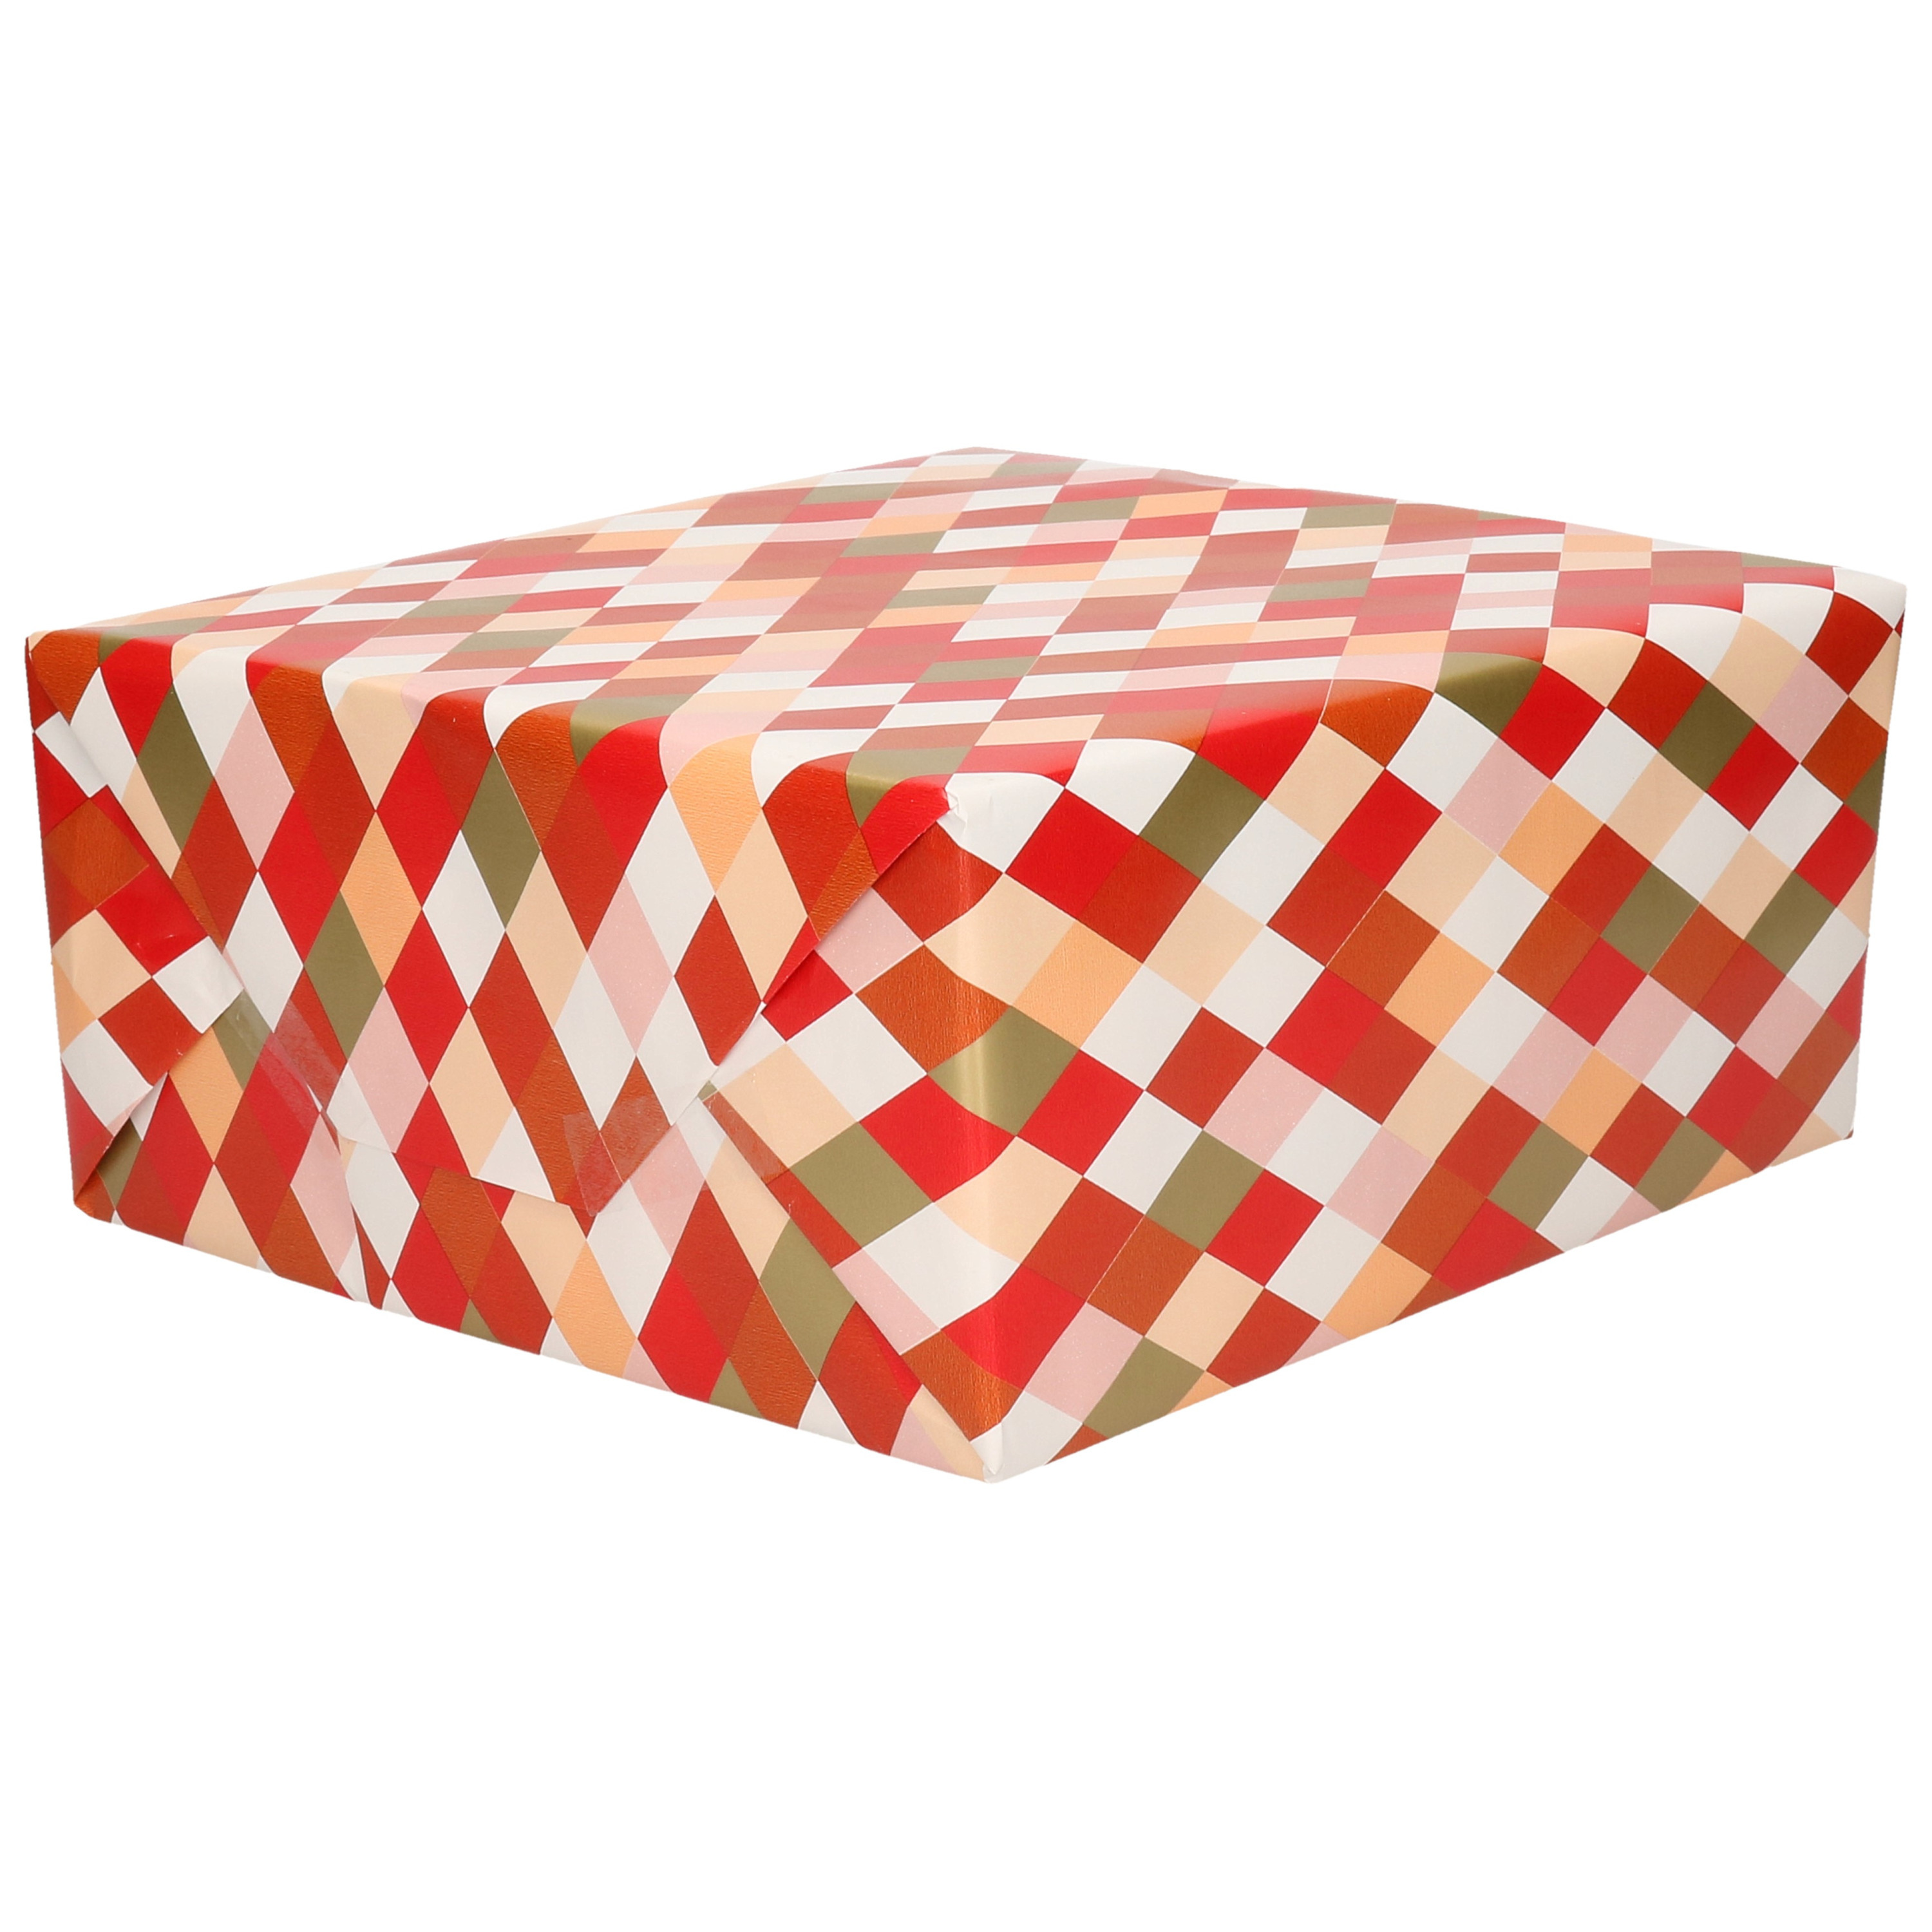 1x Inpakpapier/cadeaupapier roze/rood/goud ruiten motief 200 x 70 cm rol